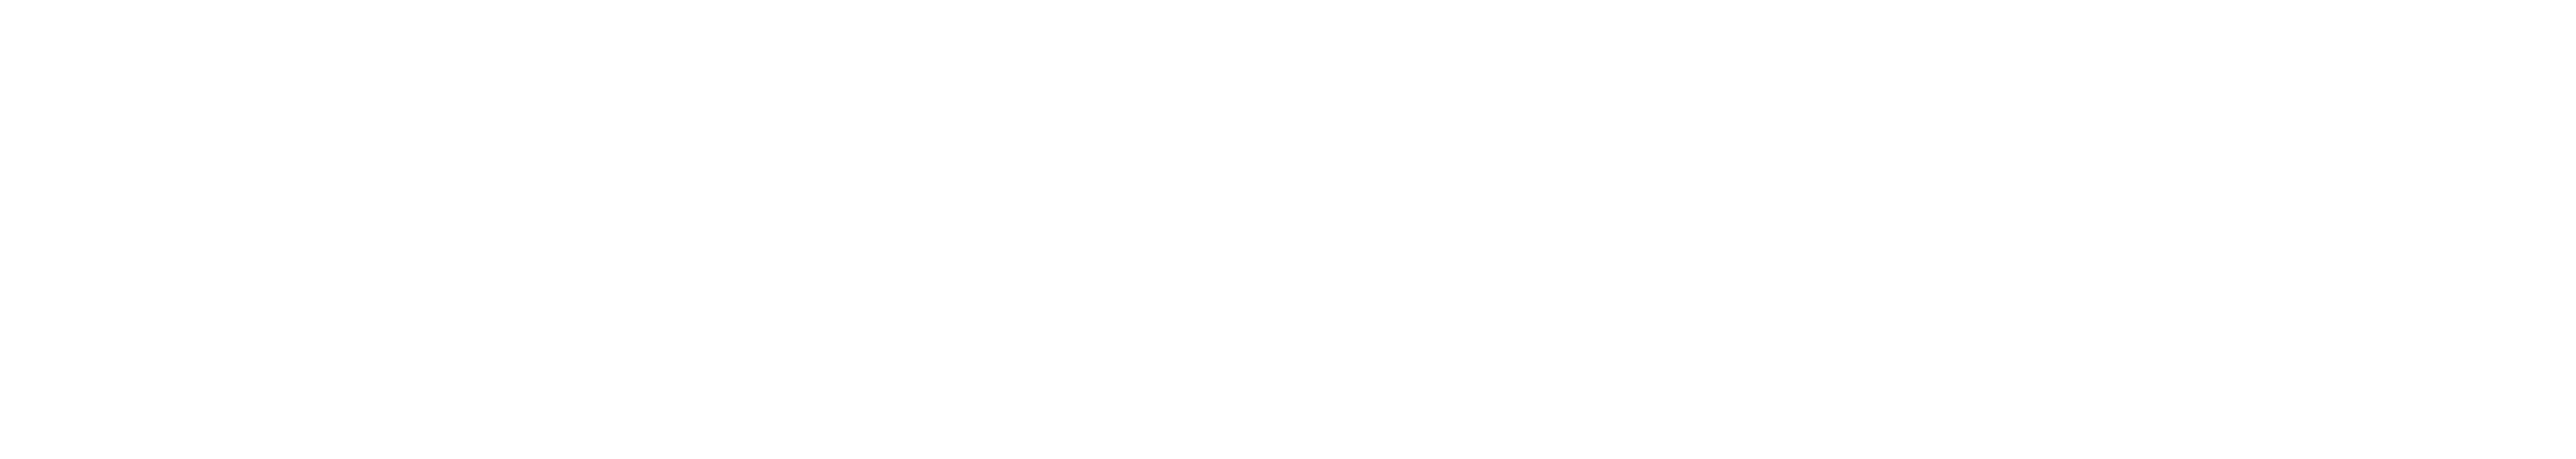 Deluxe-Entertainment